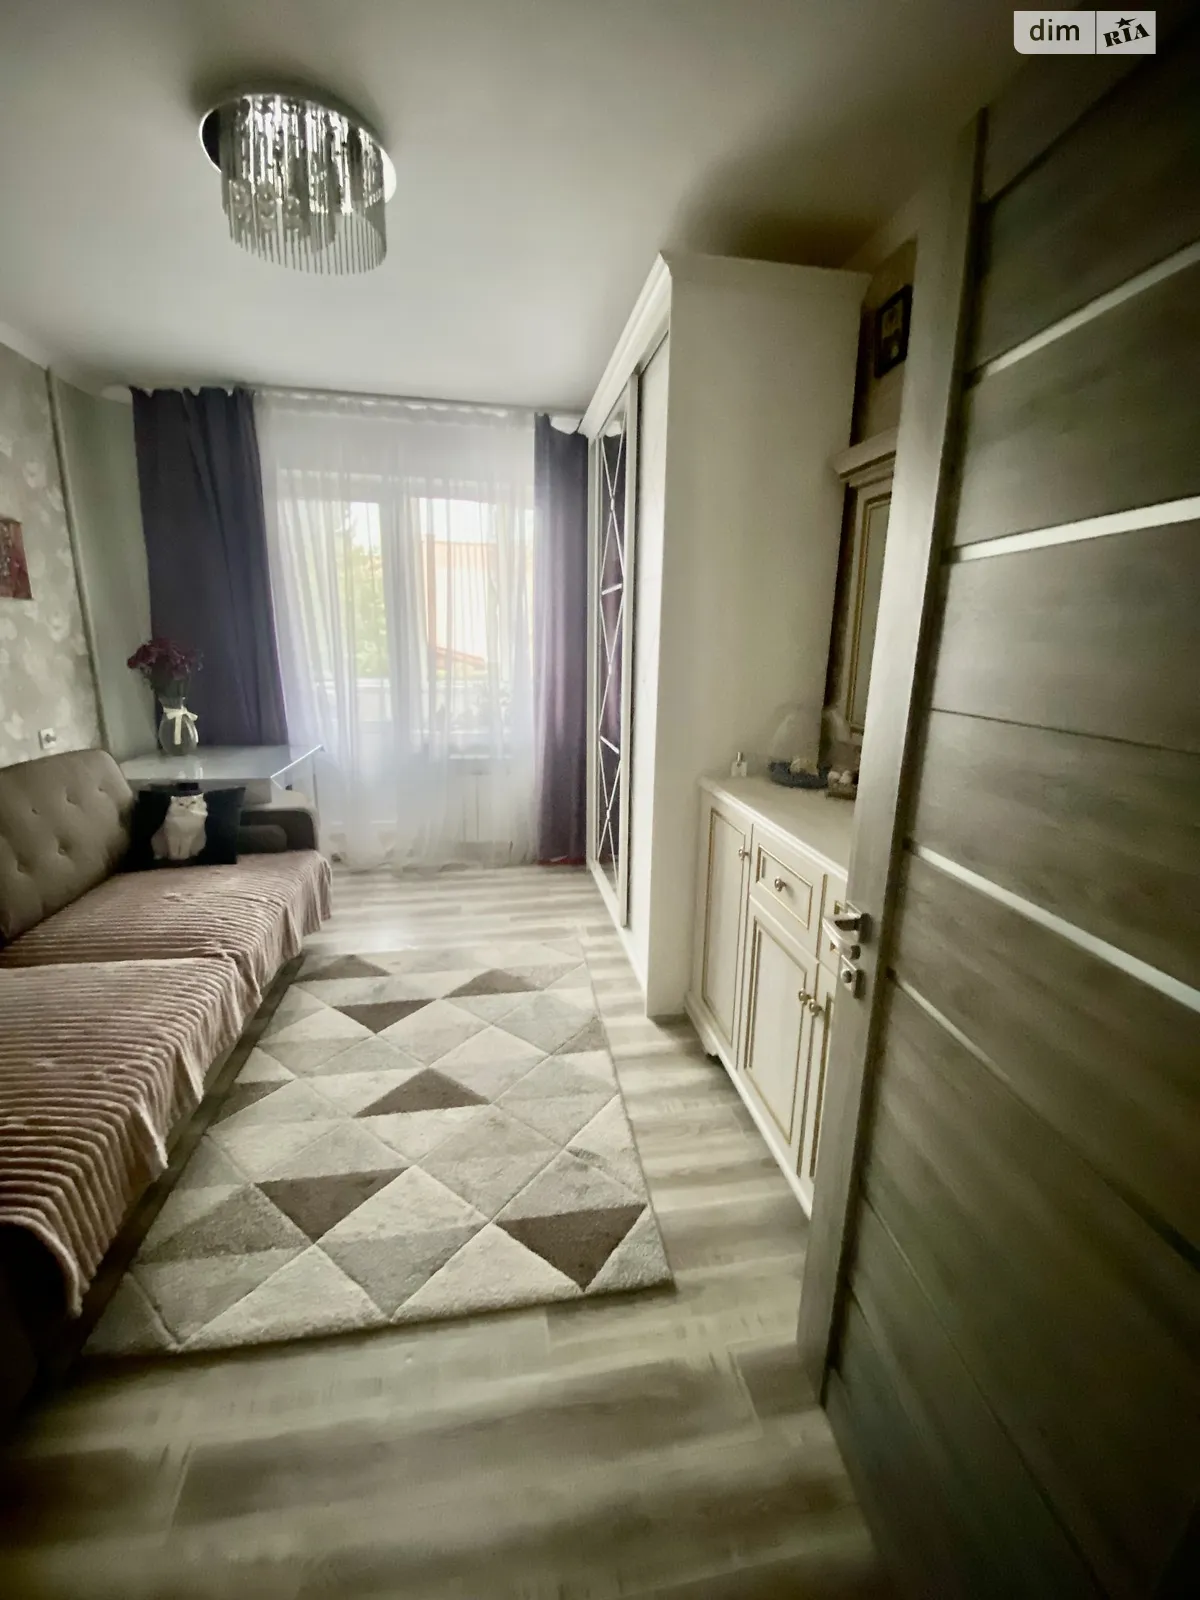 3-кімнатна квартира 63 кв. м у Луцьку, цена: 57000 $